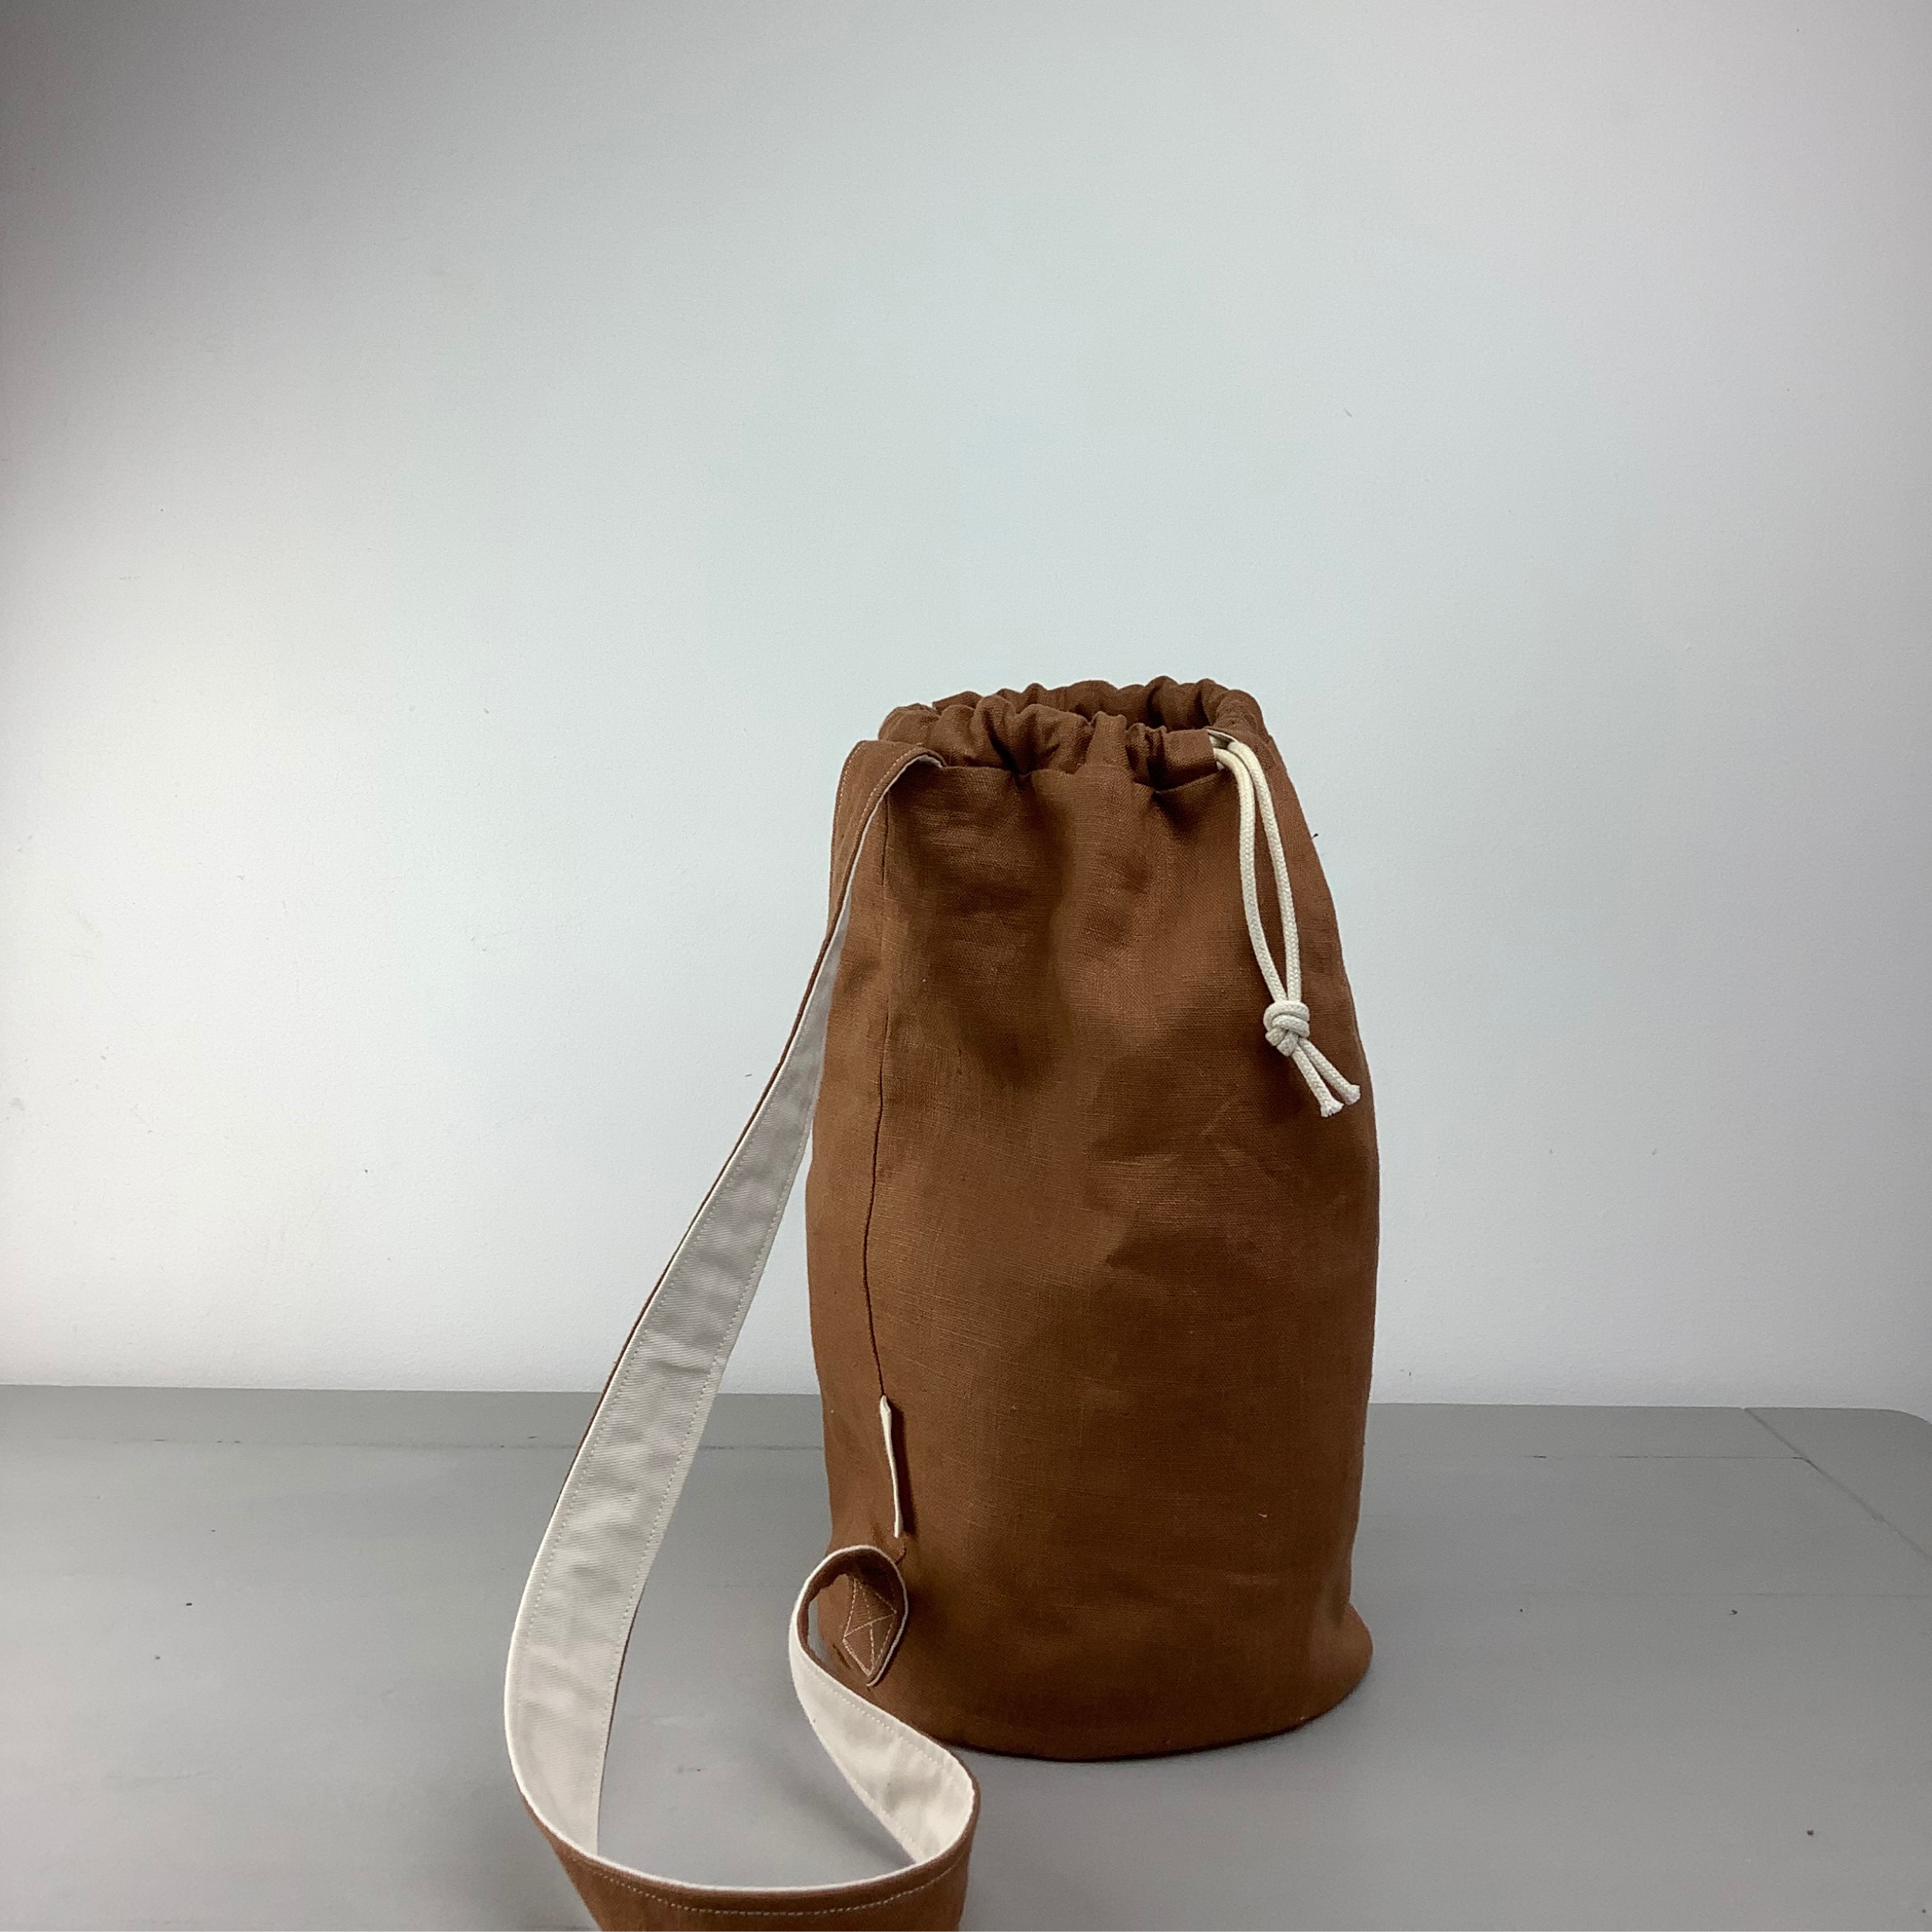 Lasenby Samphire Duffle Project Bag - The Fold Line